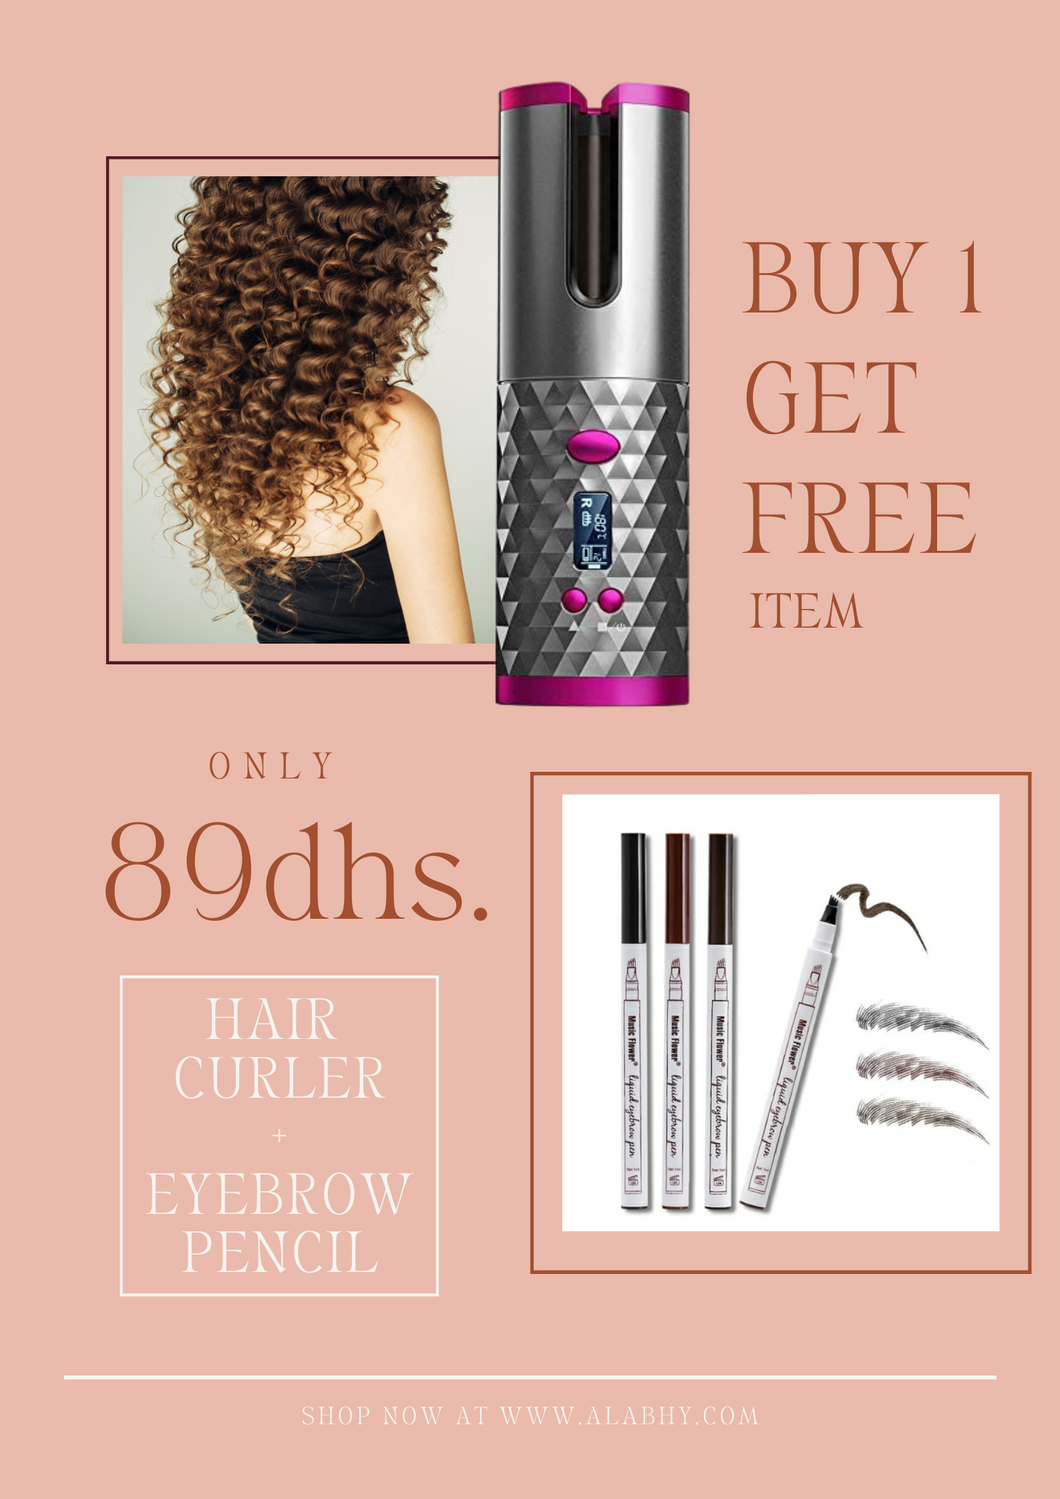 2 in 1 offer - Hair Curler + Eyebrow Pencil